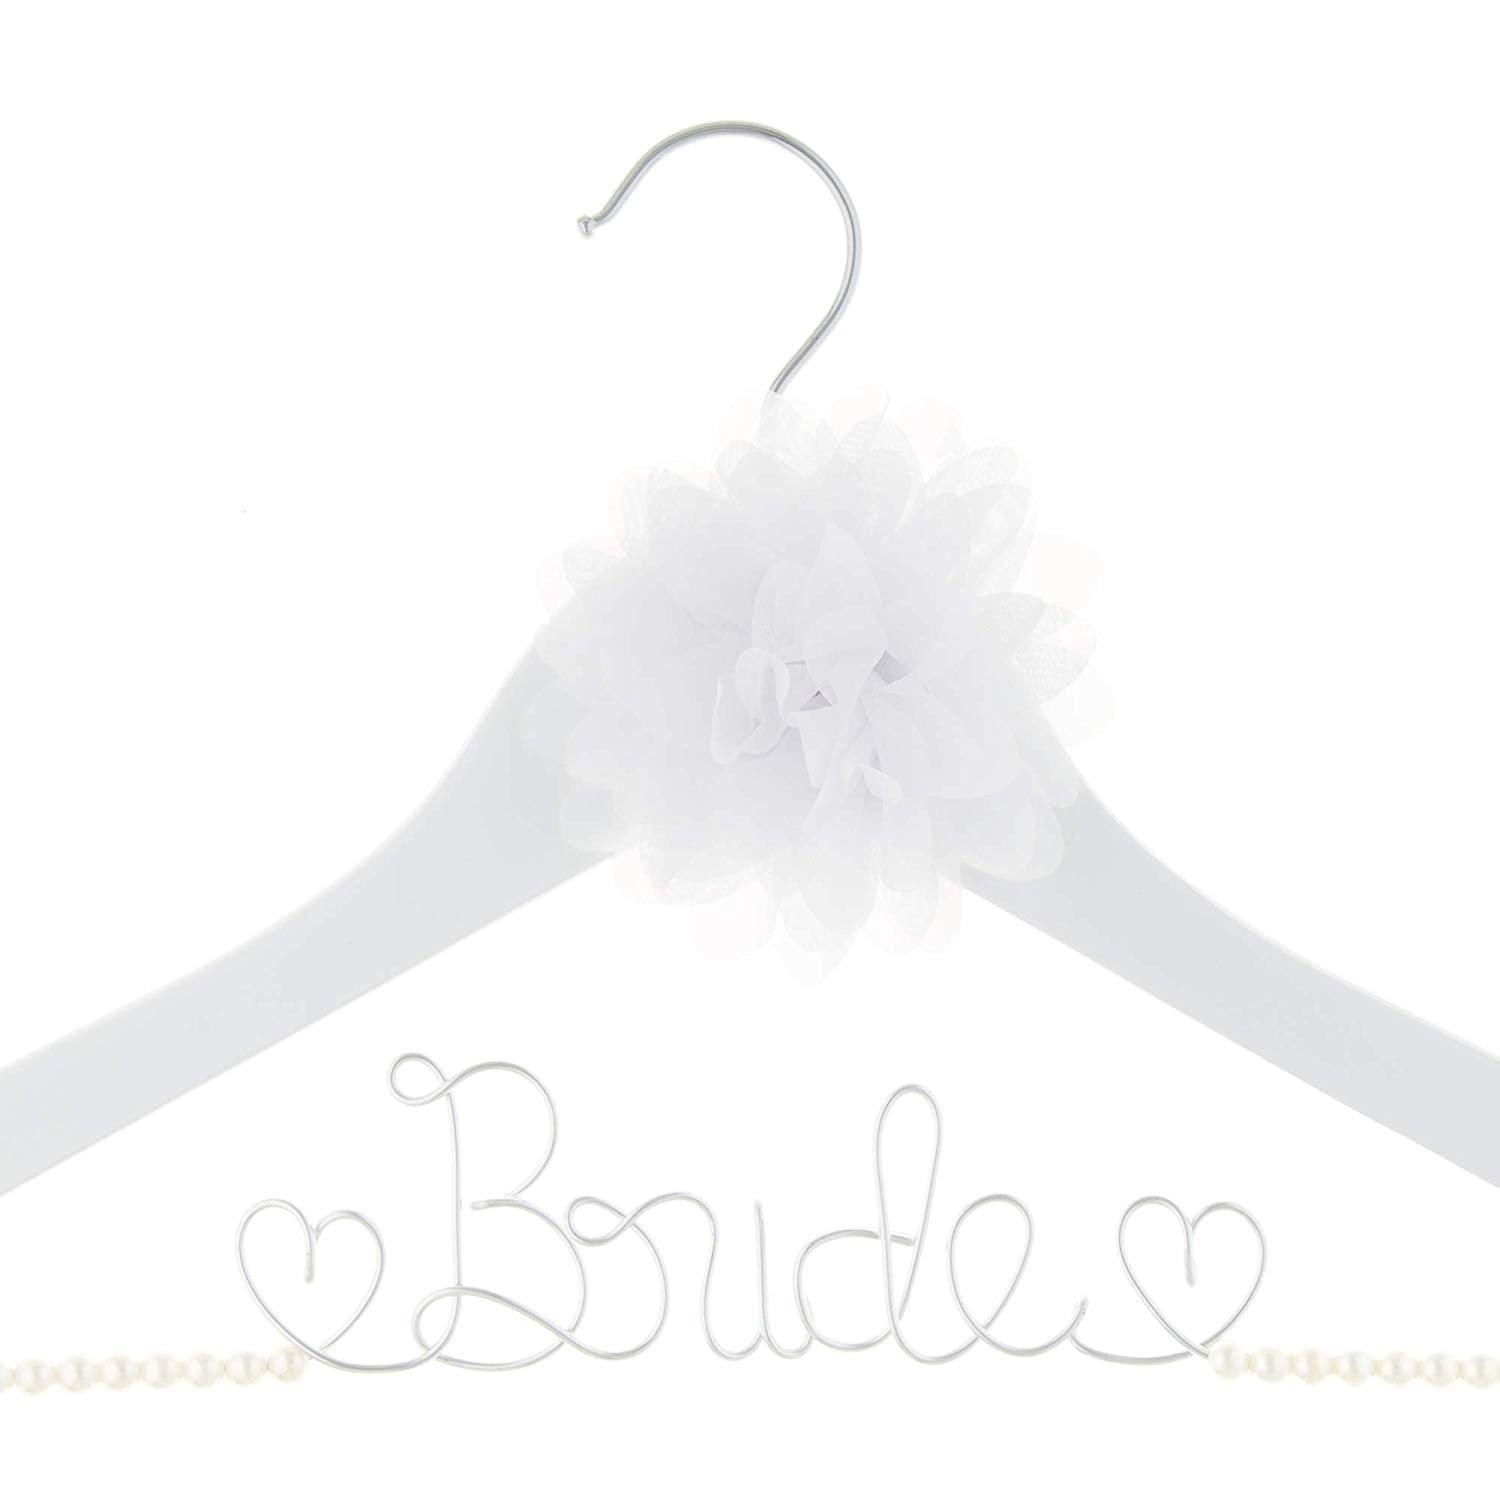 pengkai The Bride Hangers The Wedding Dress Hanging Bride's Wedding Gift Wood Color Silver Thread